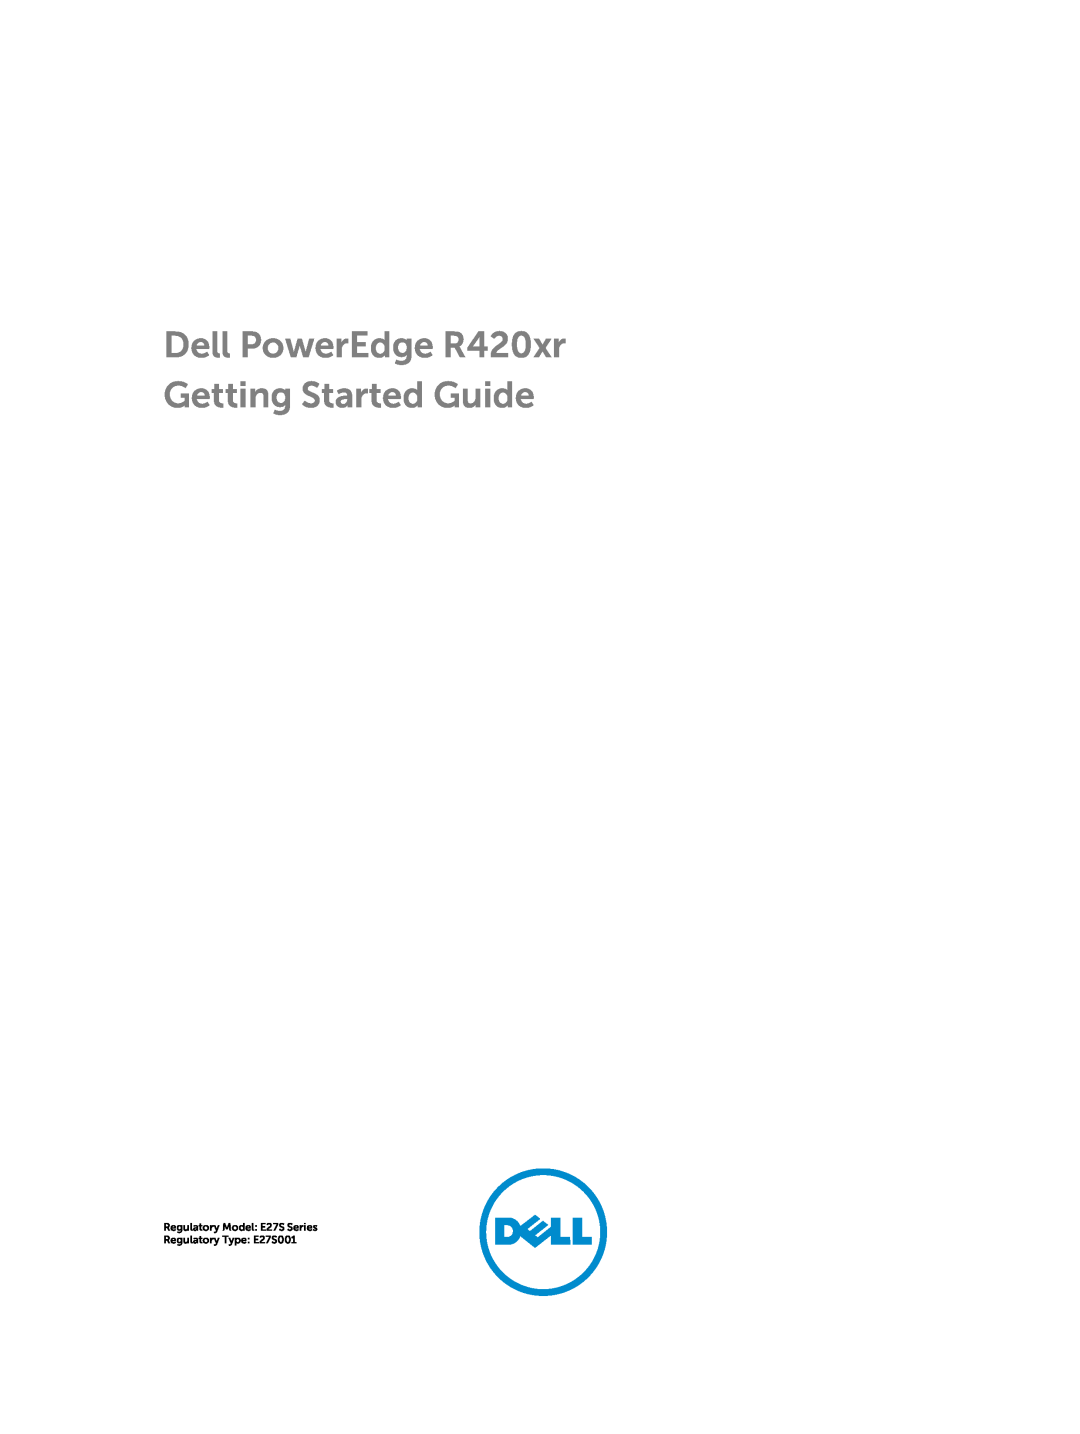 Dell manual Dell PowerEdge R420xr Getting Started Guide, Regulatory Model E27S Series Regulatory Type E27S001 